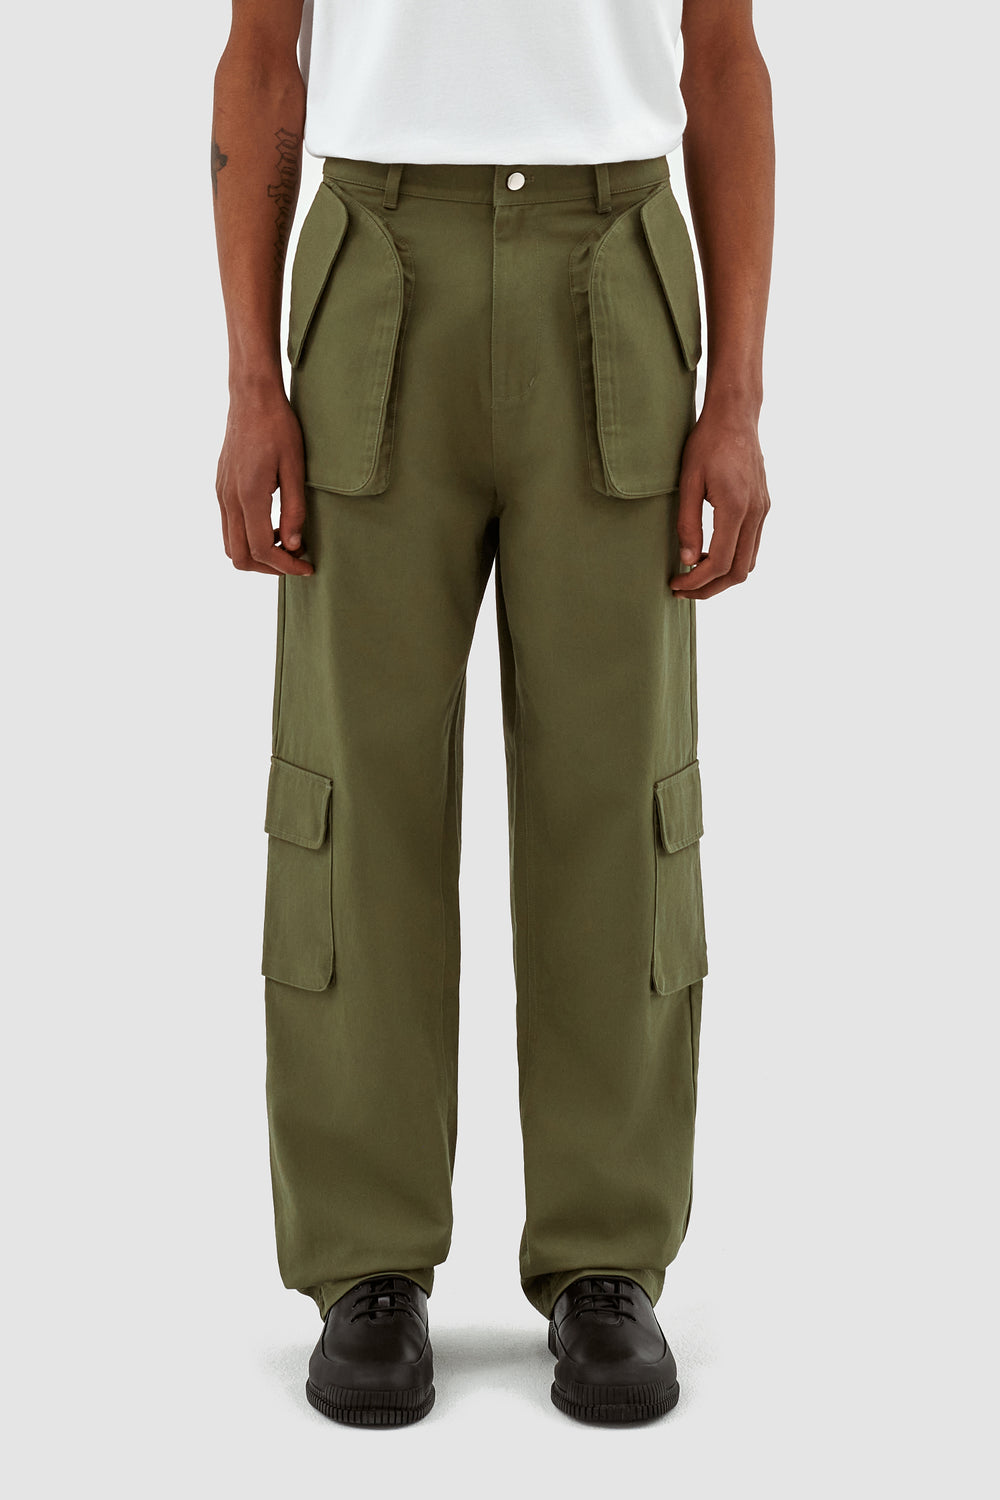 Jaden Cargo Pants - Light Green